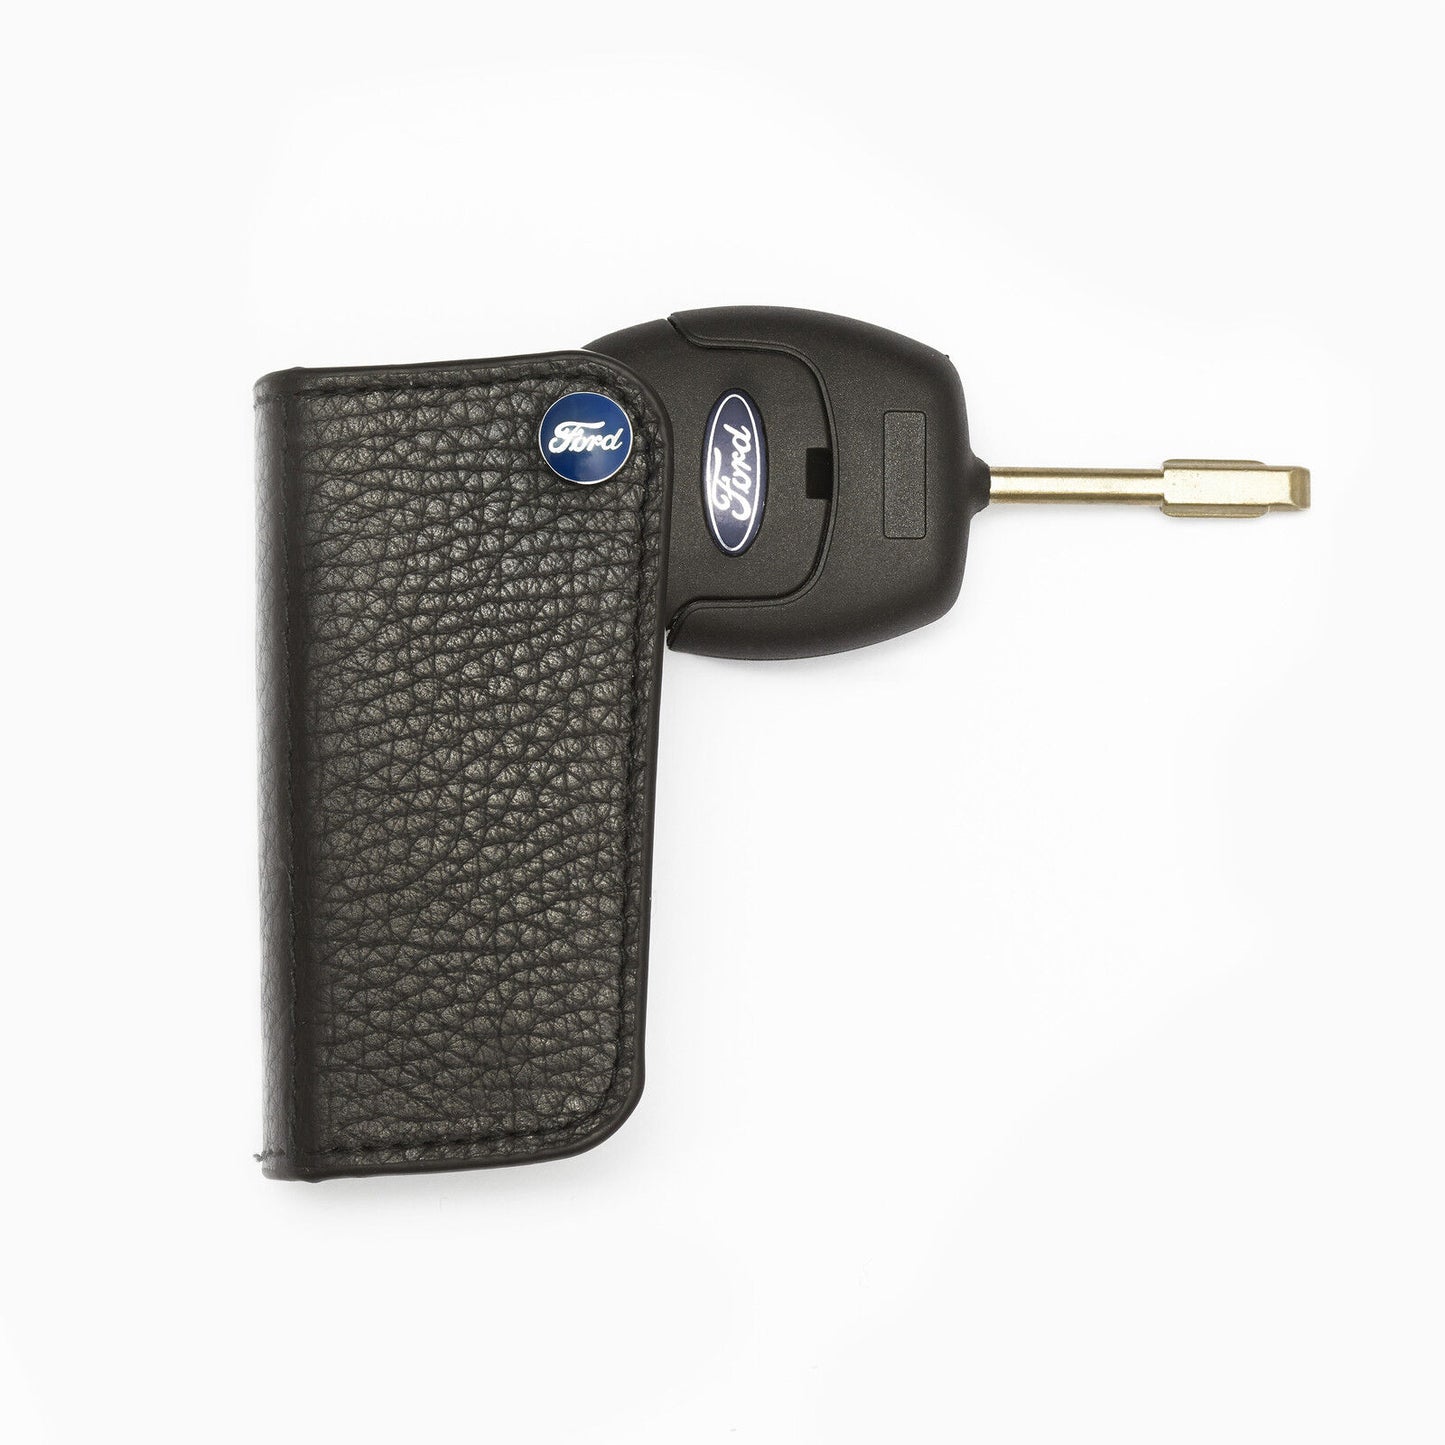 Richbrook 'Official Licensed' Ford Logo FlipFob (Leather Car Key Holder)